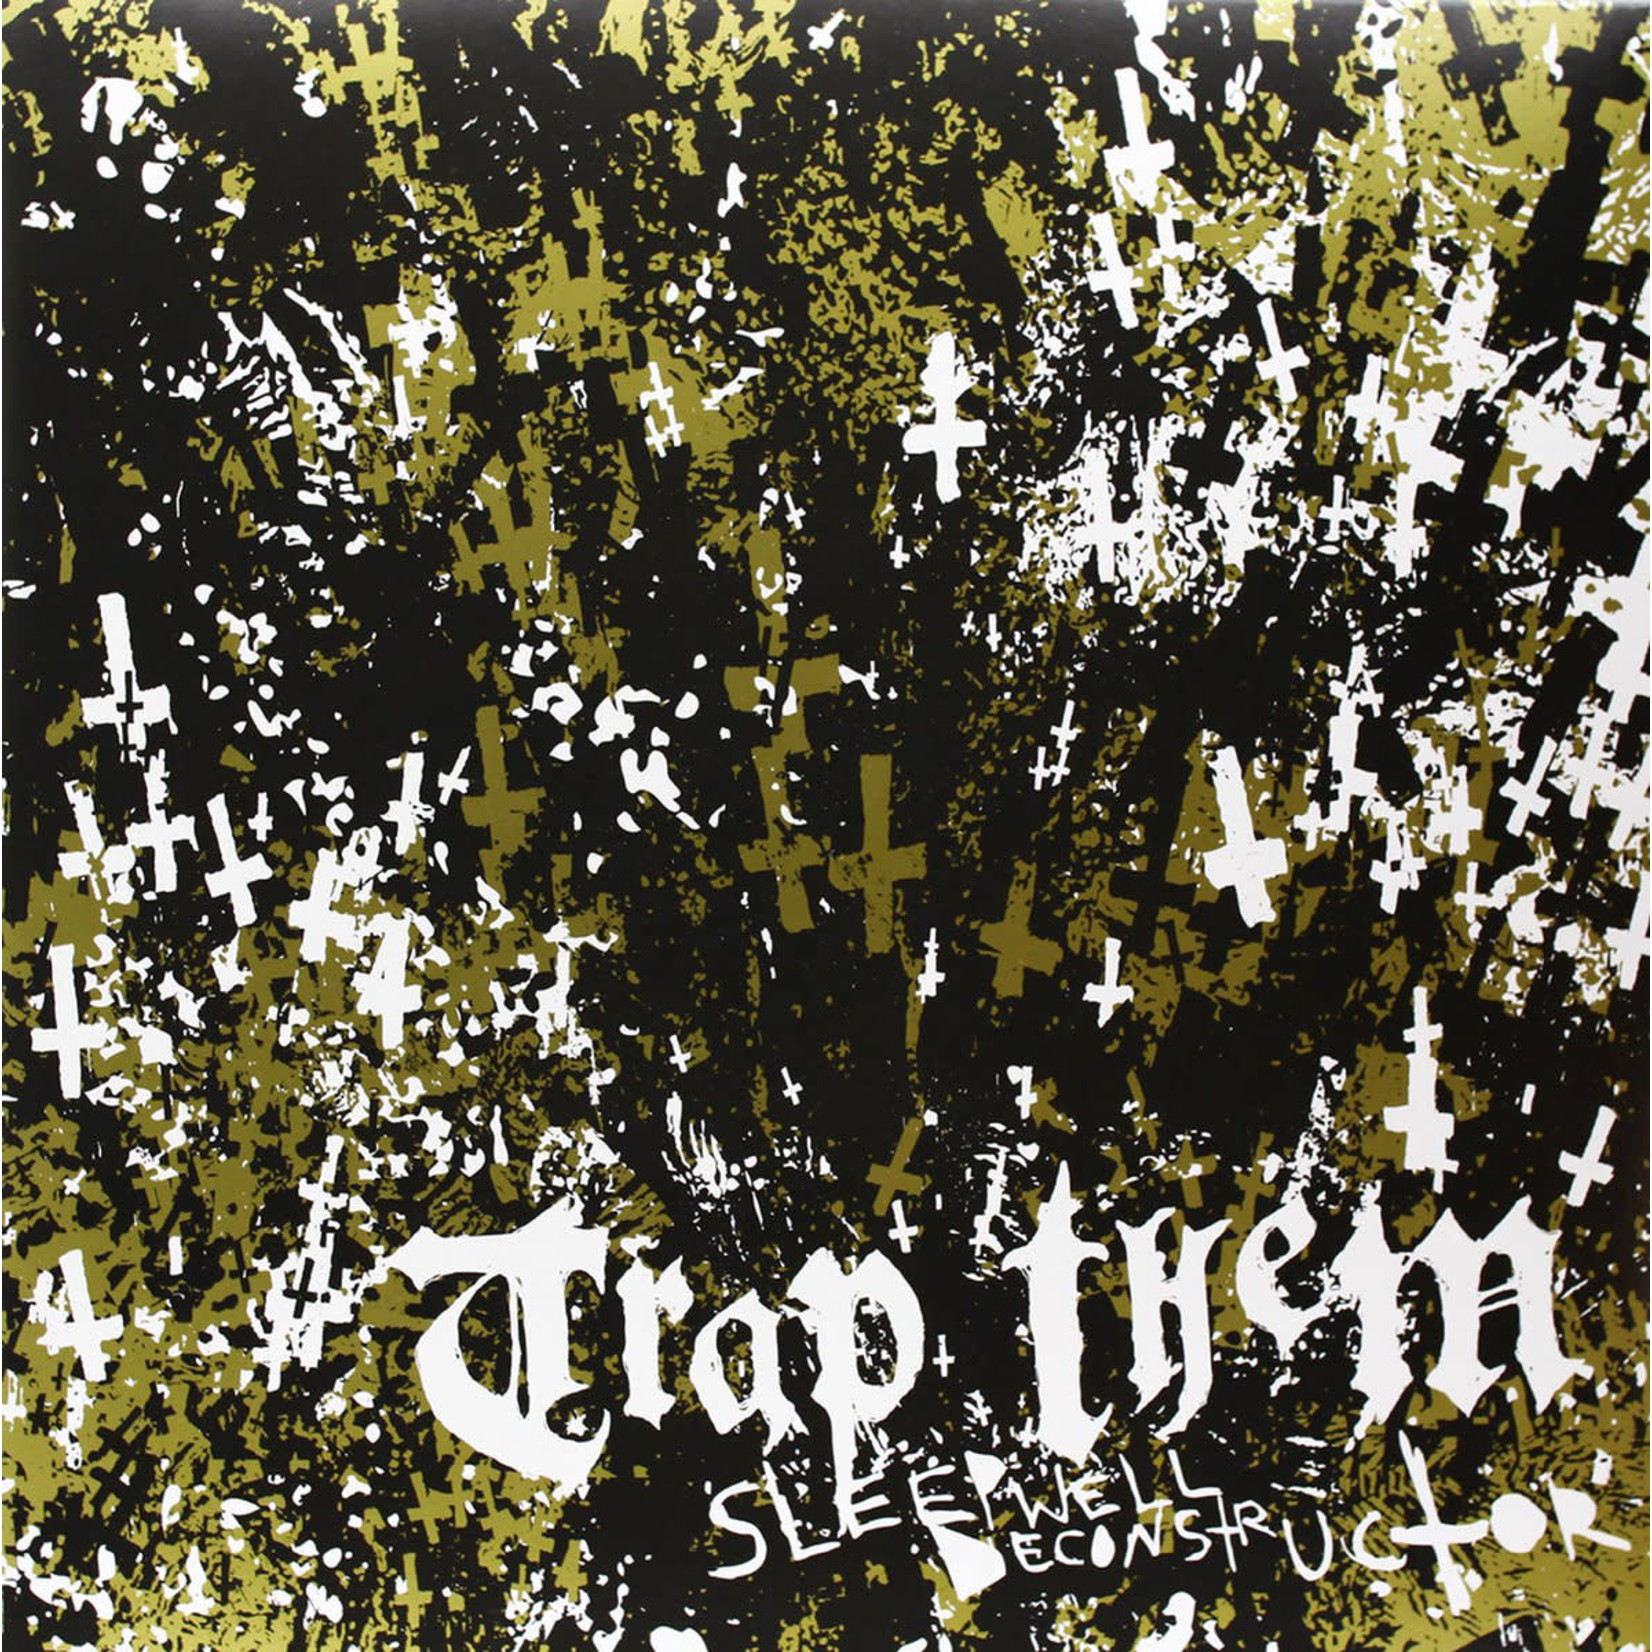 [New] Trap Them - Sleepwell Deconstructor